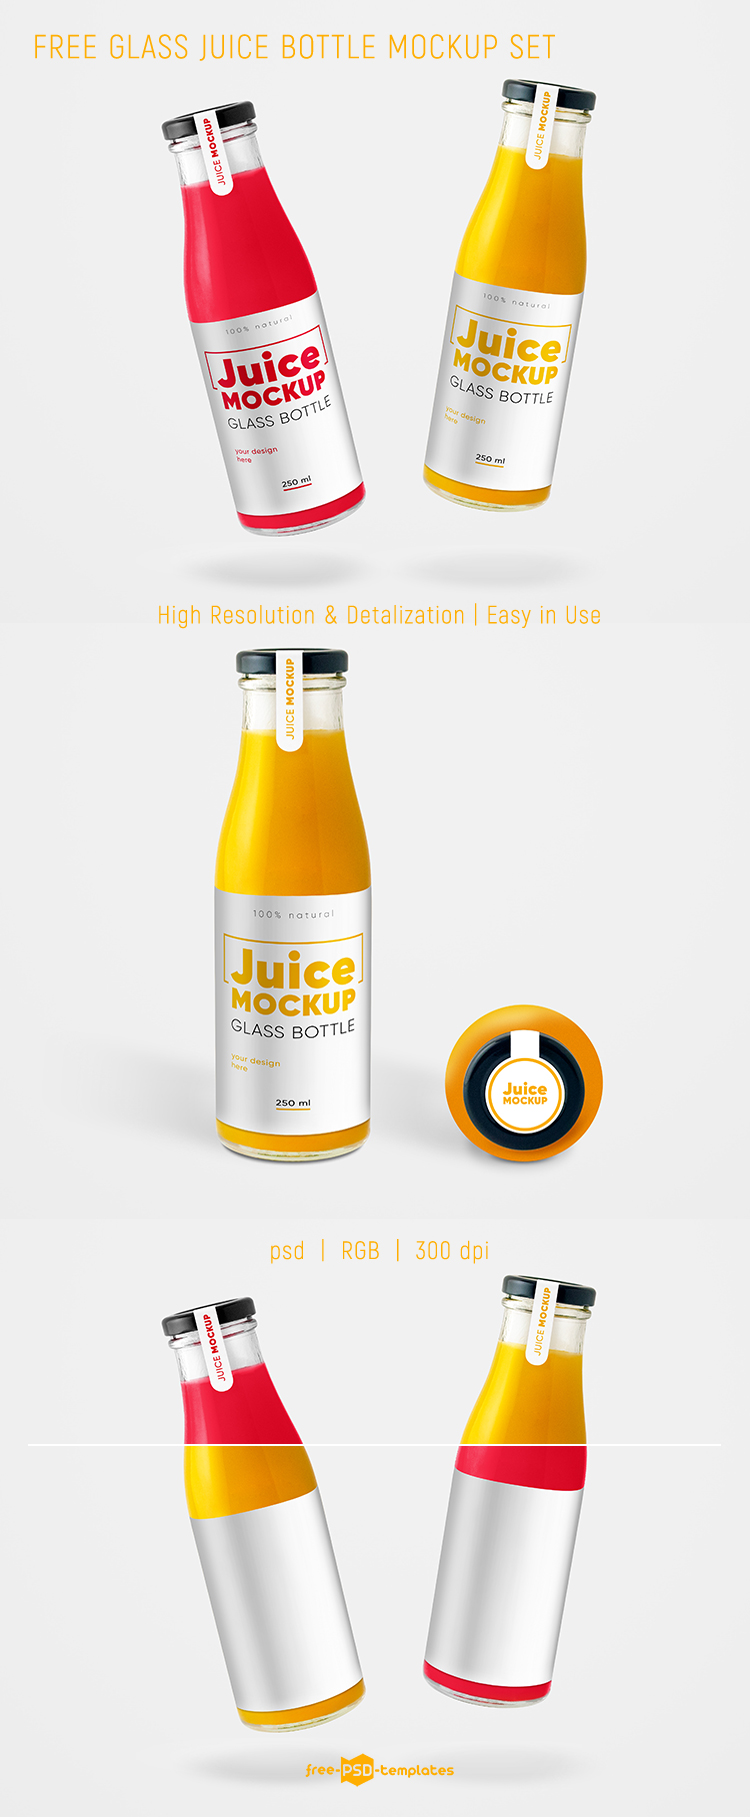 Download Free Glass Juice Bottle Mockup Set | Free PSD Templates